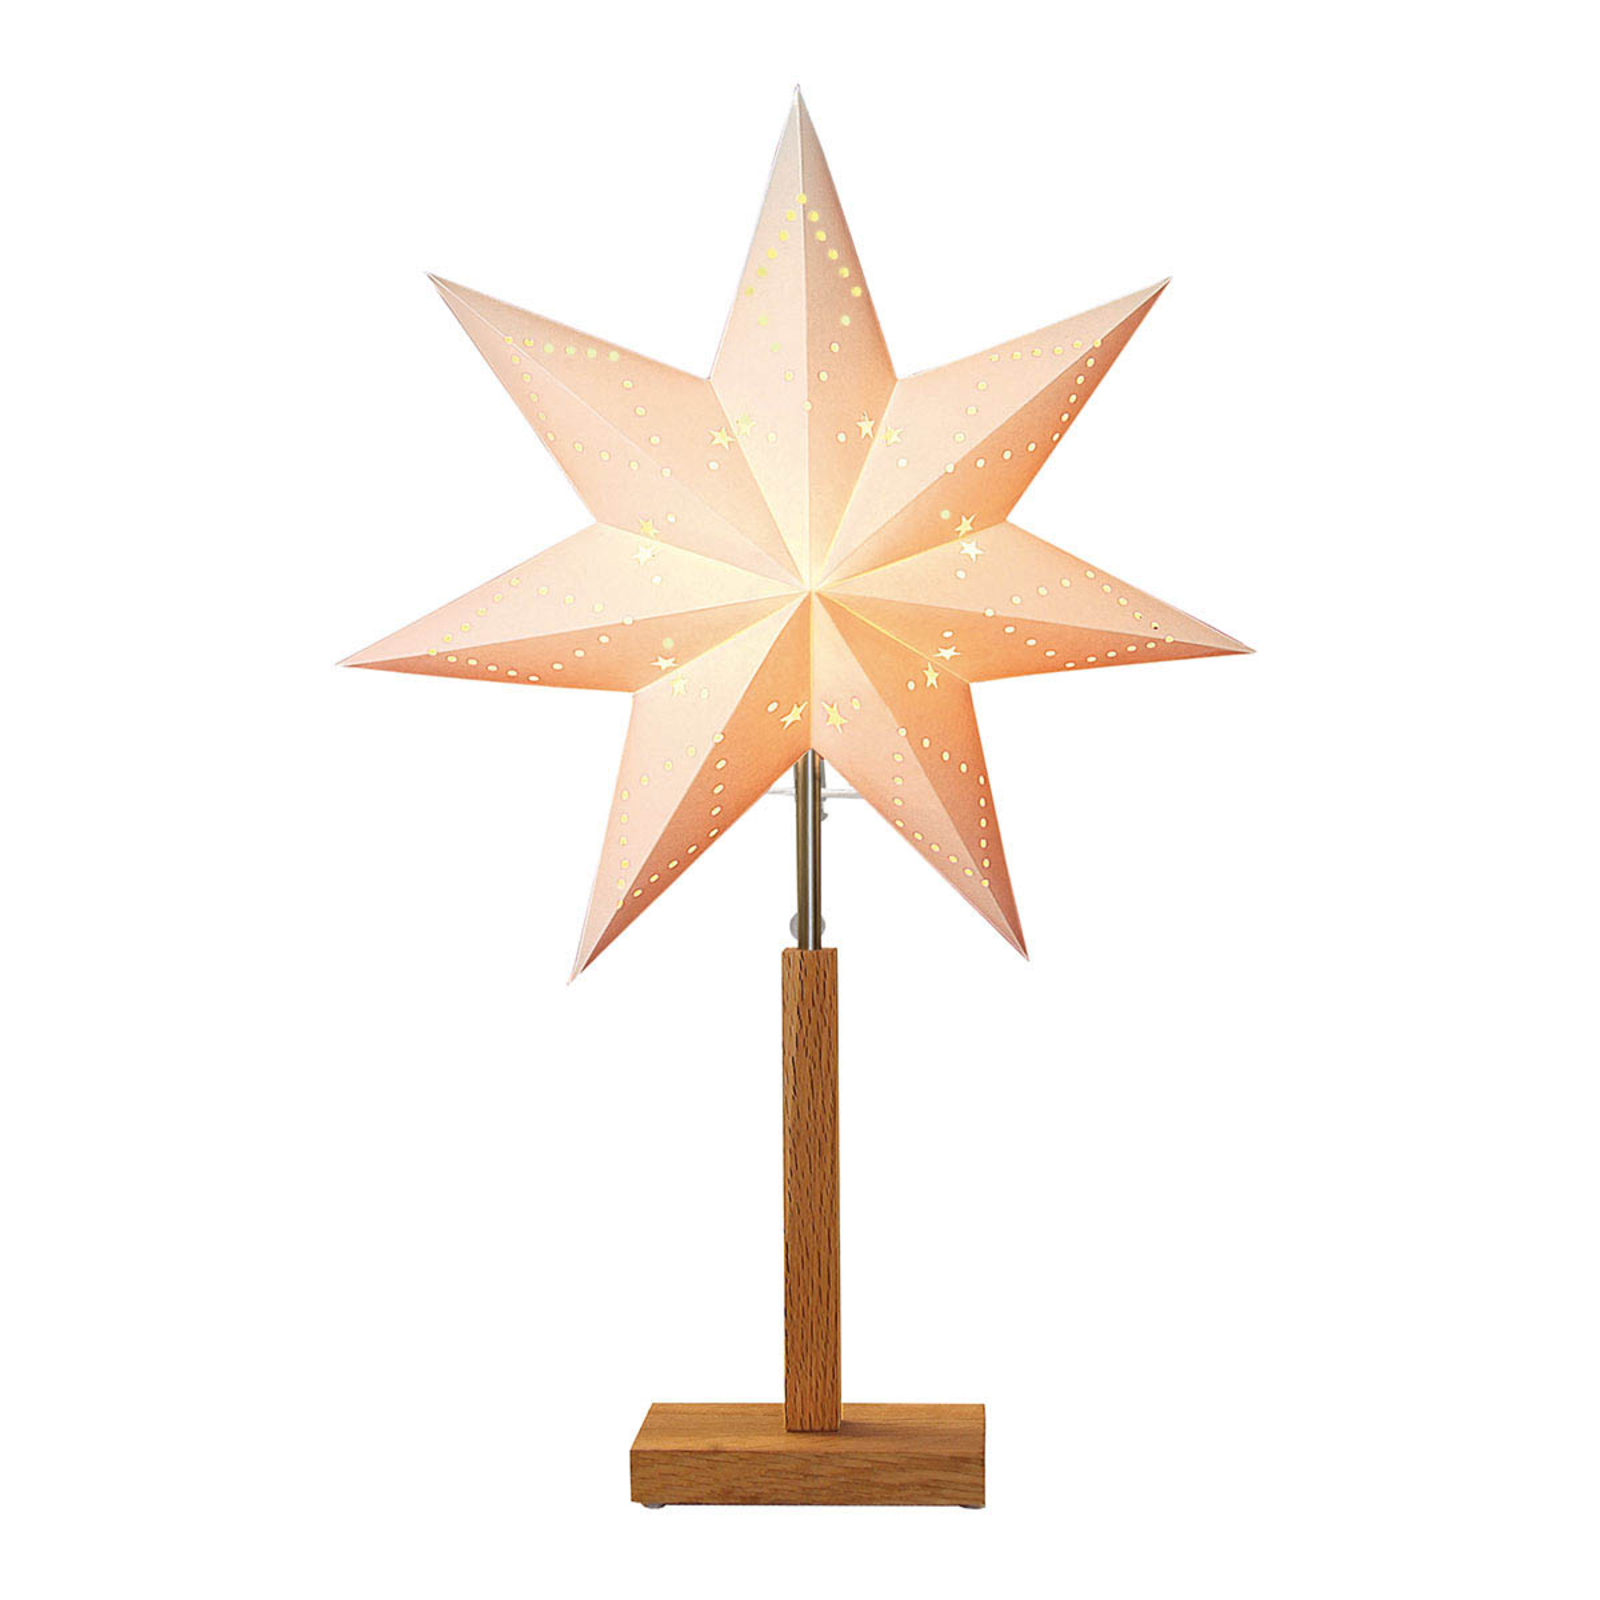 Karo standing decorative light patterned star 70cm